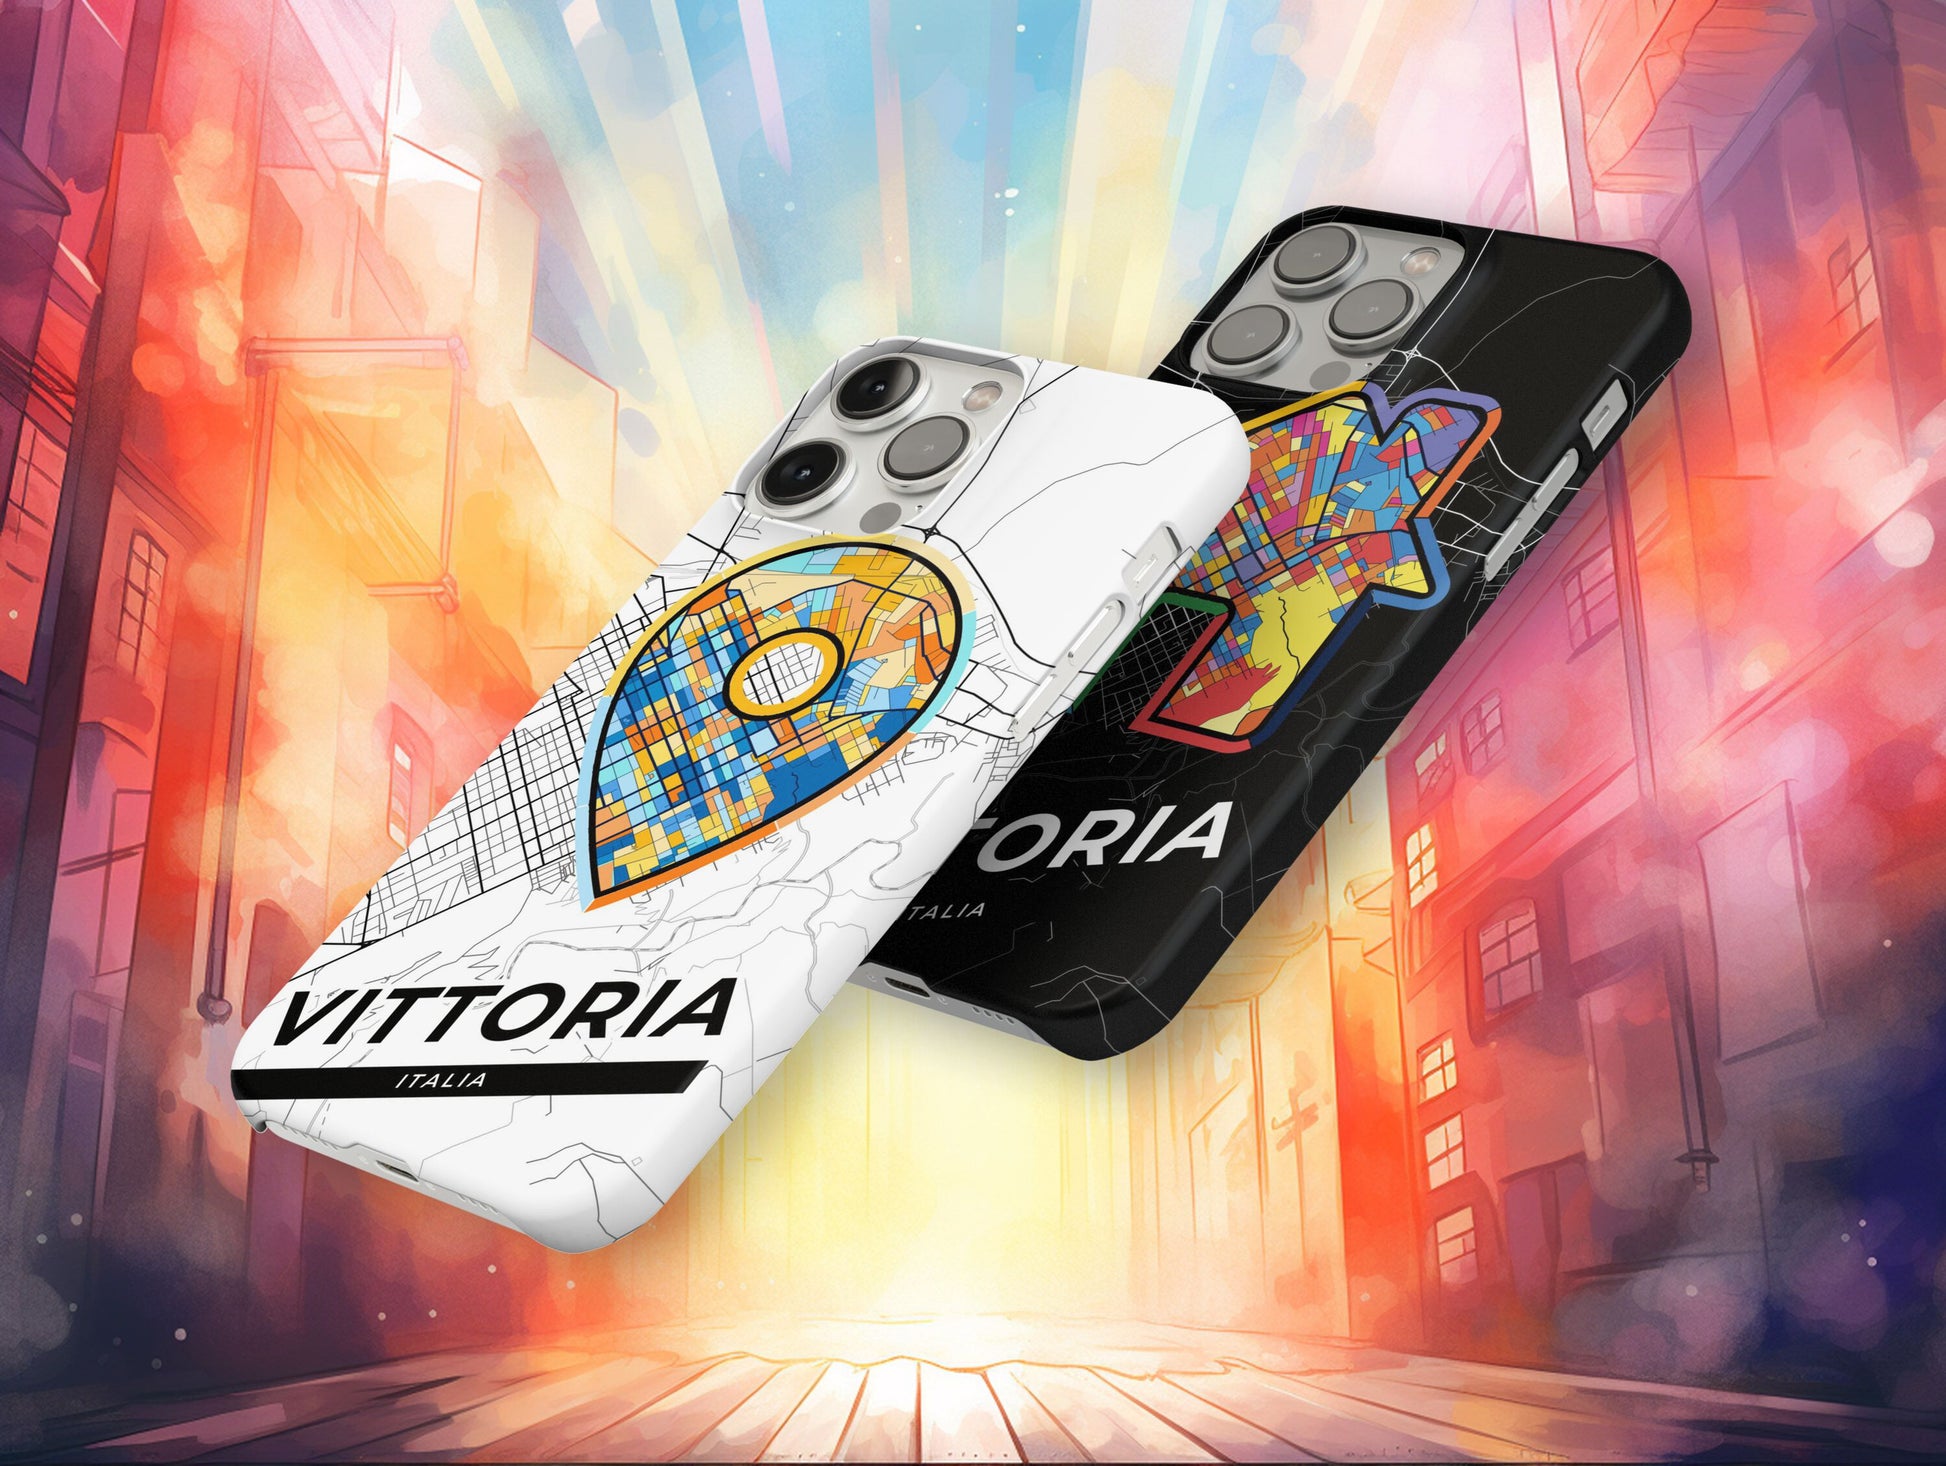 Vittoria Italy slim phone case with colorful icon